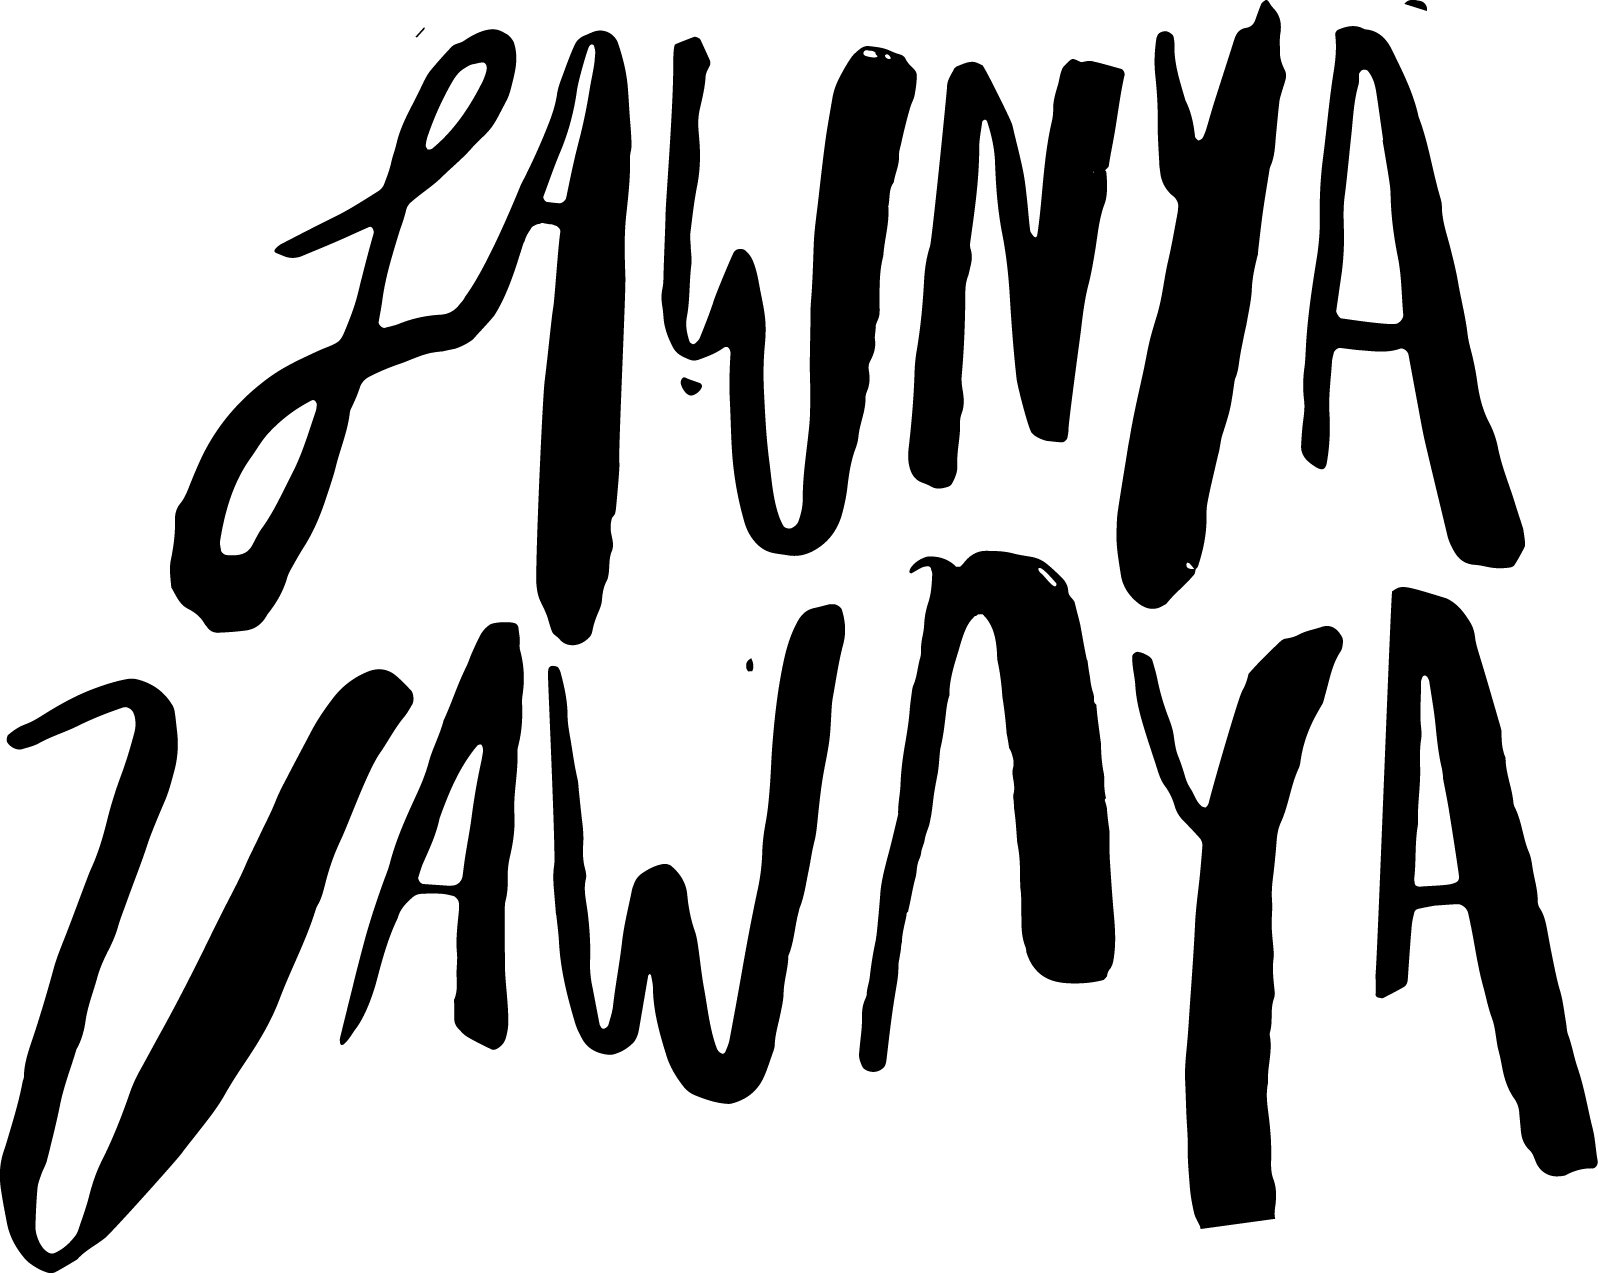 Lawnya Vawnya Logo.png